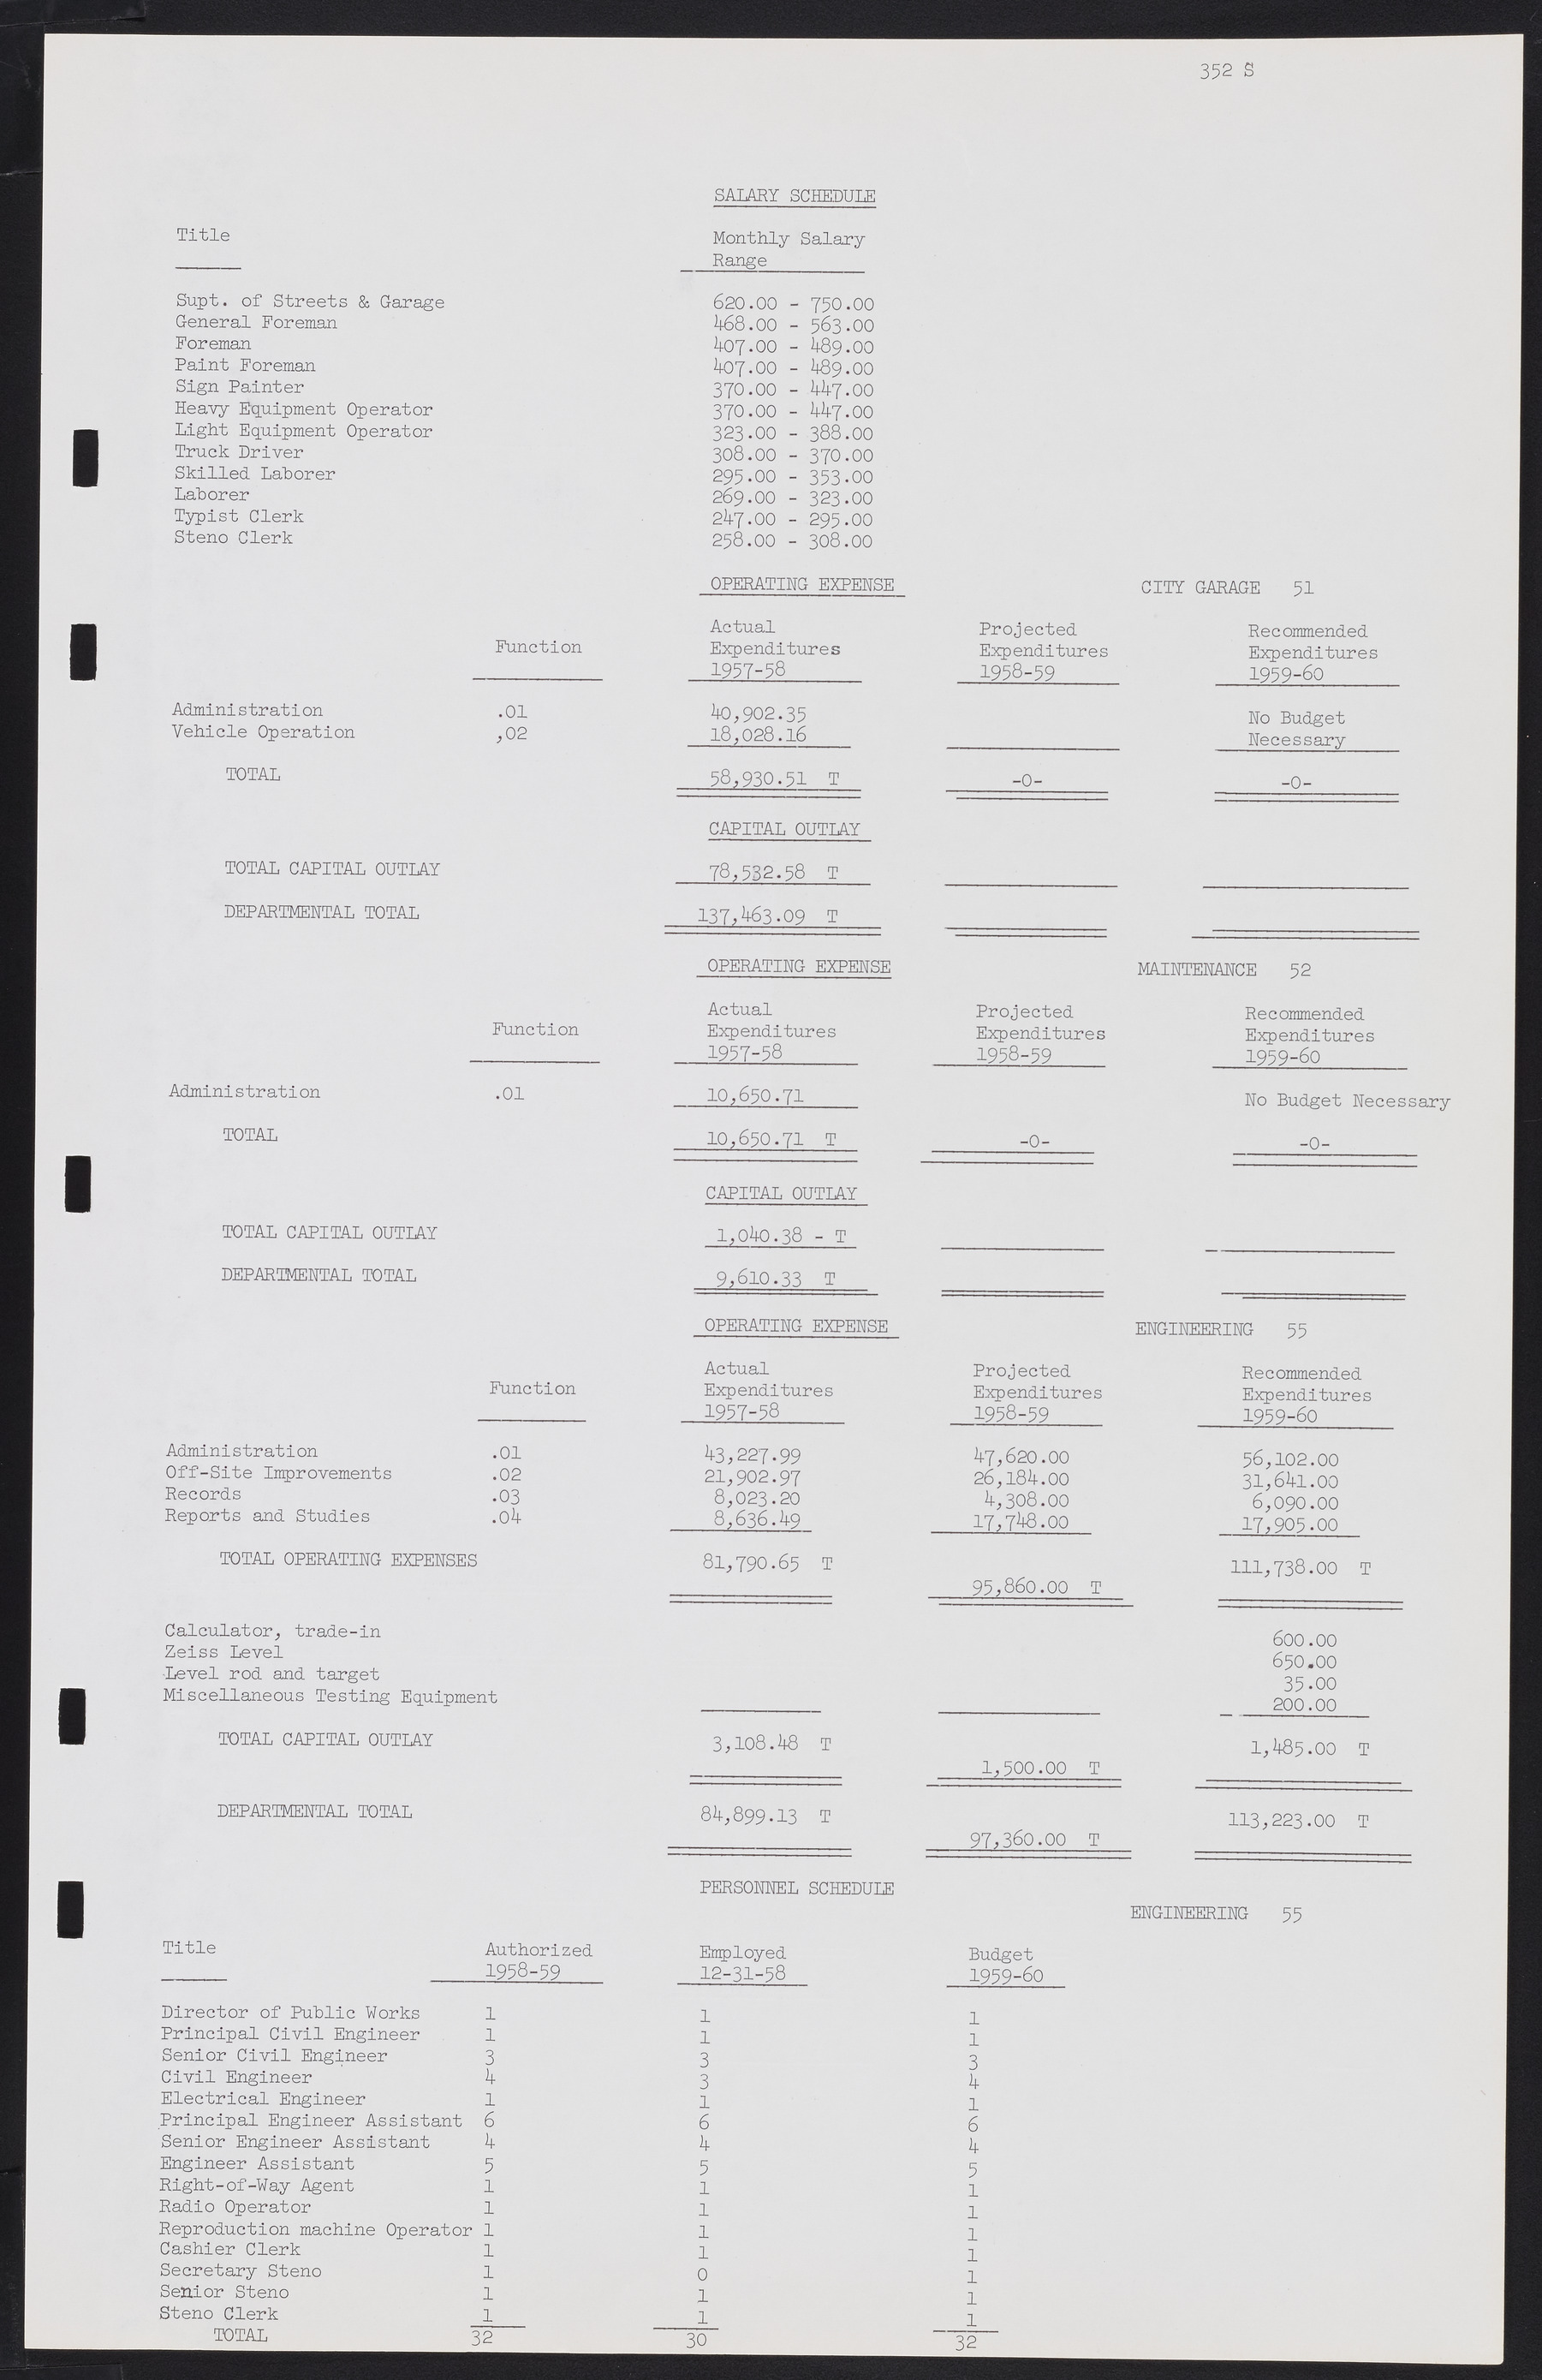 Las Vegas City Commission Minutes, November 20, 1957 to December 2, 1959, lvc000011-379